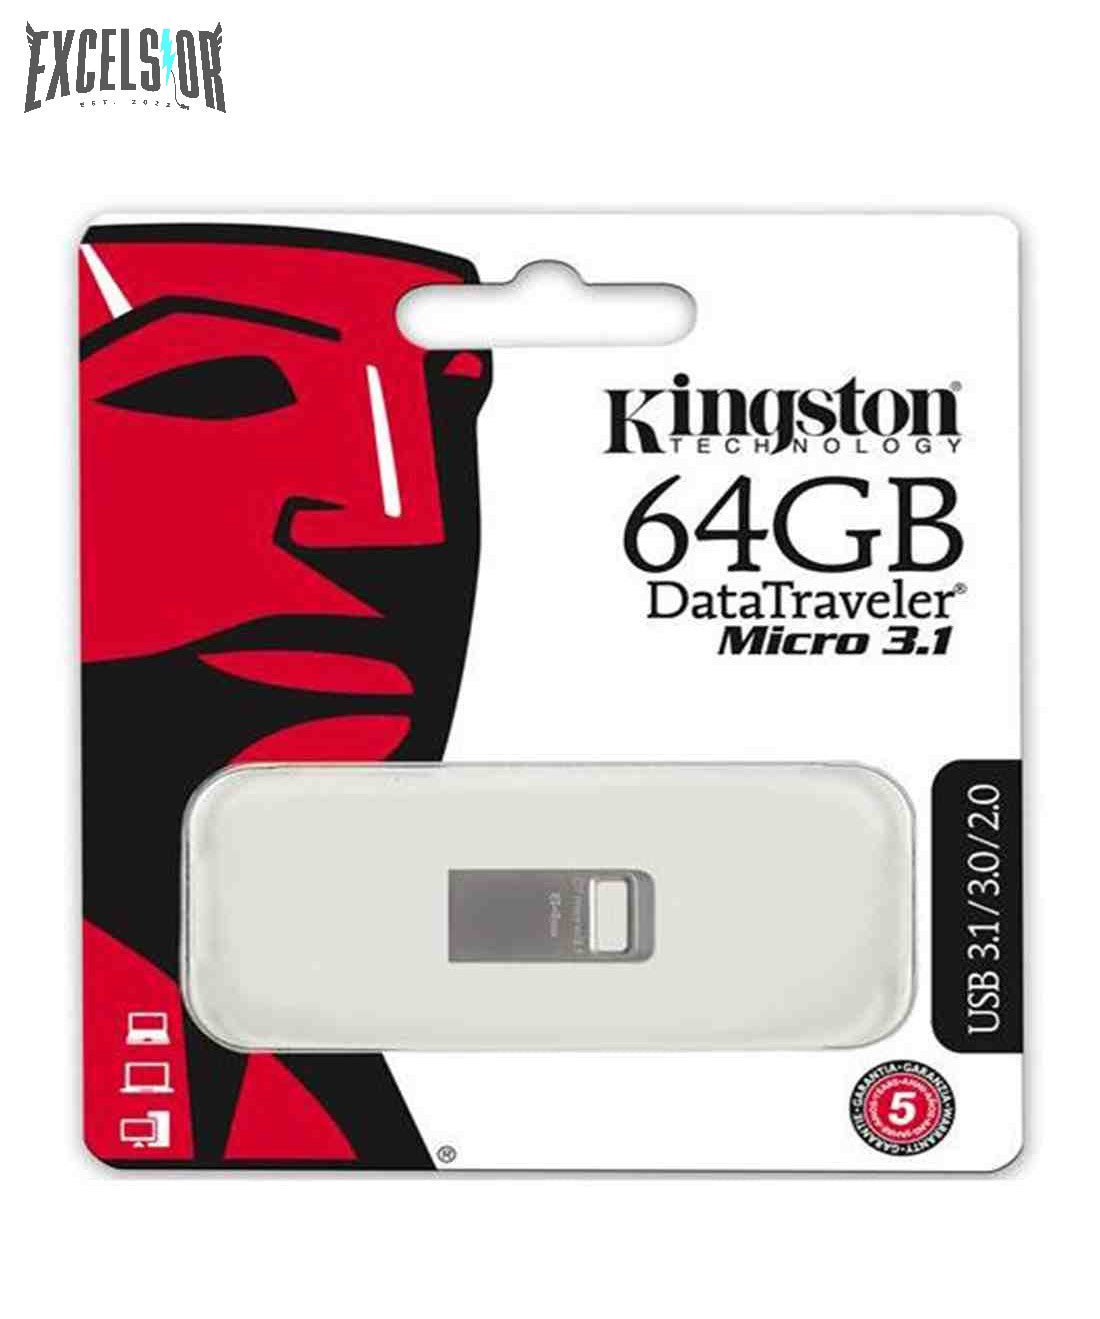 Kingston DT Micro 3.1